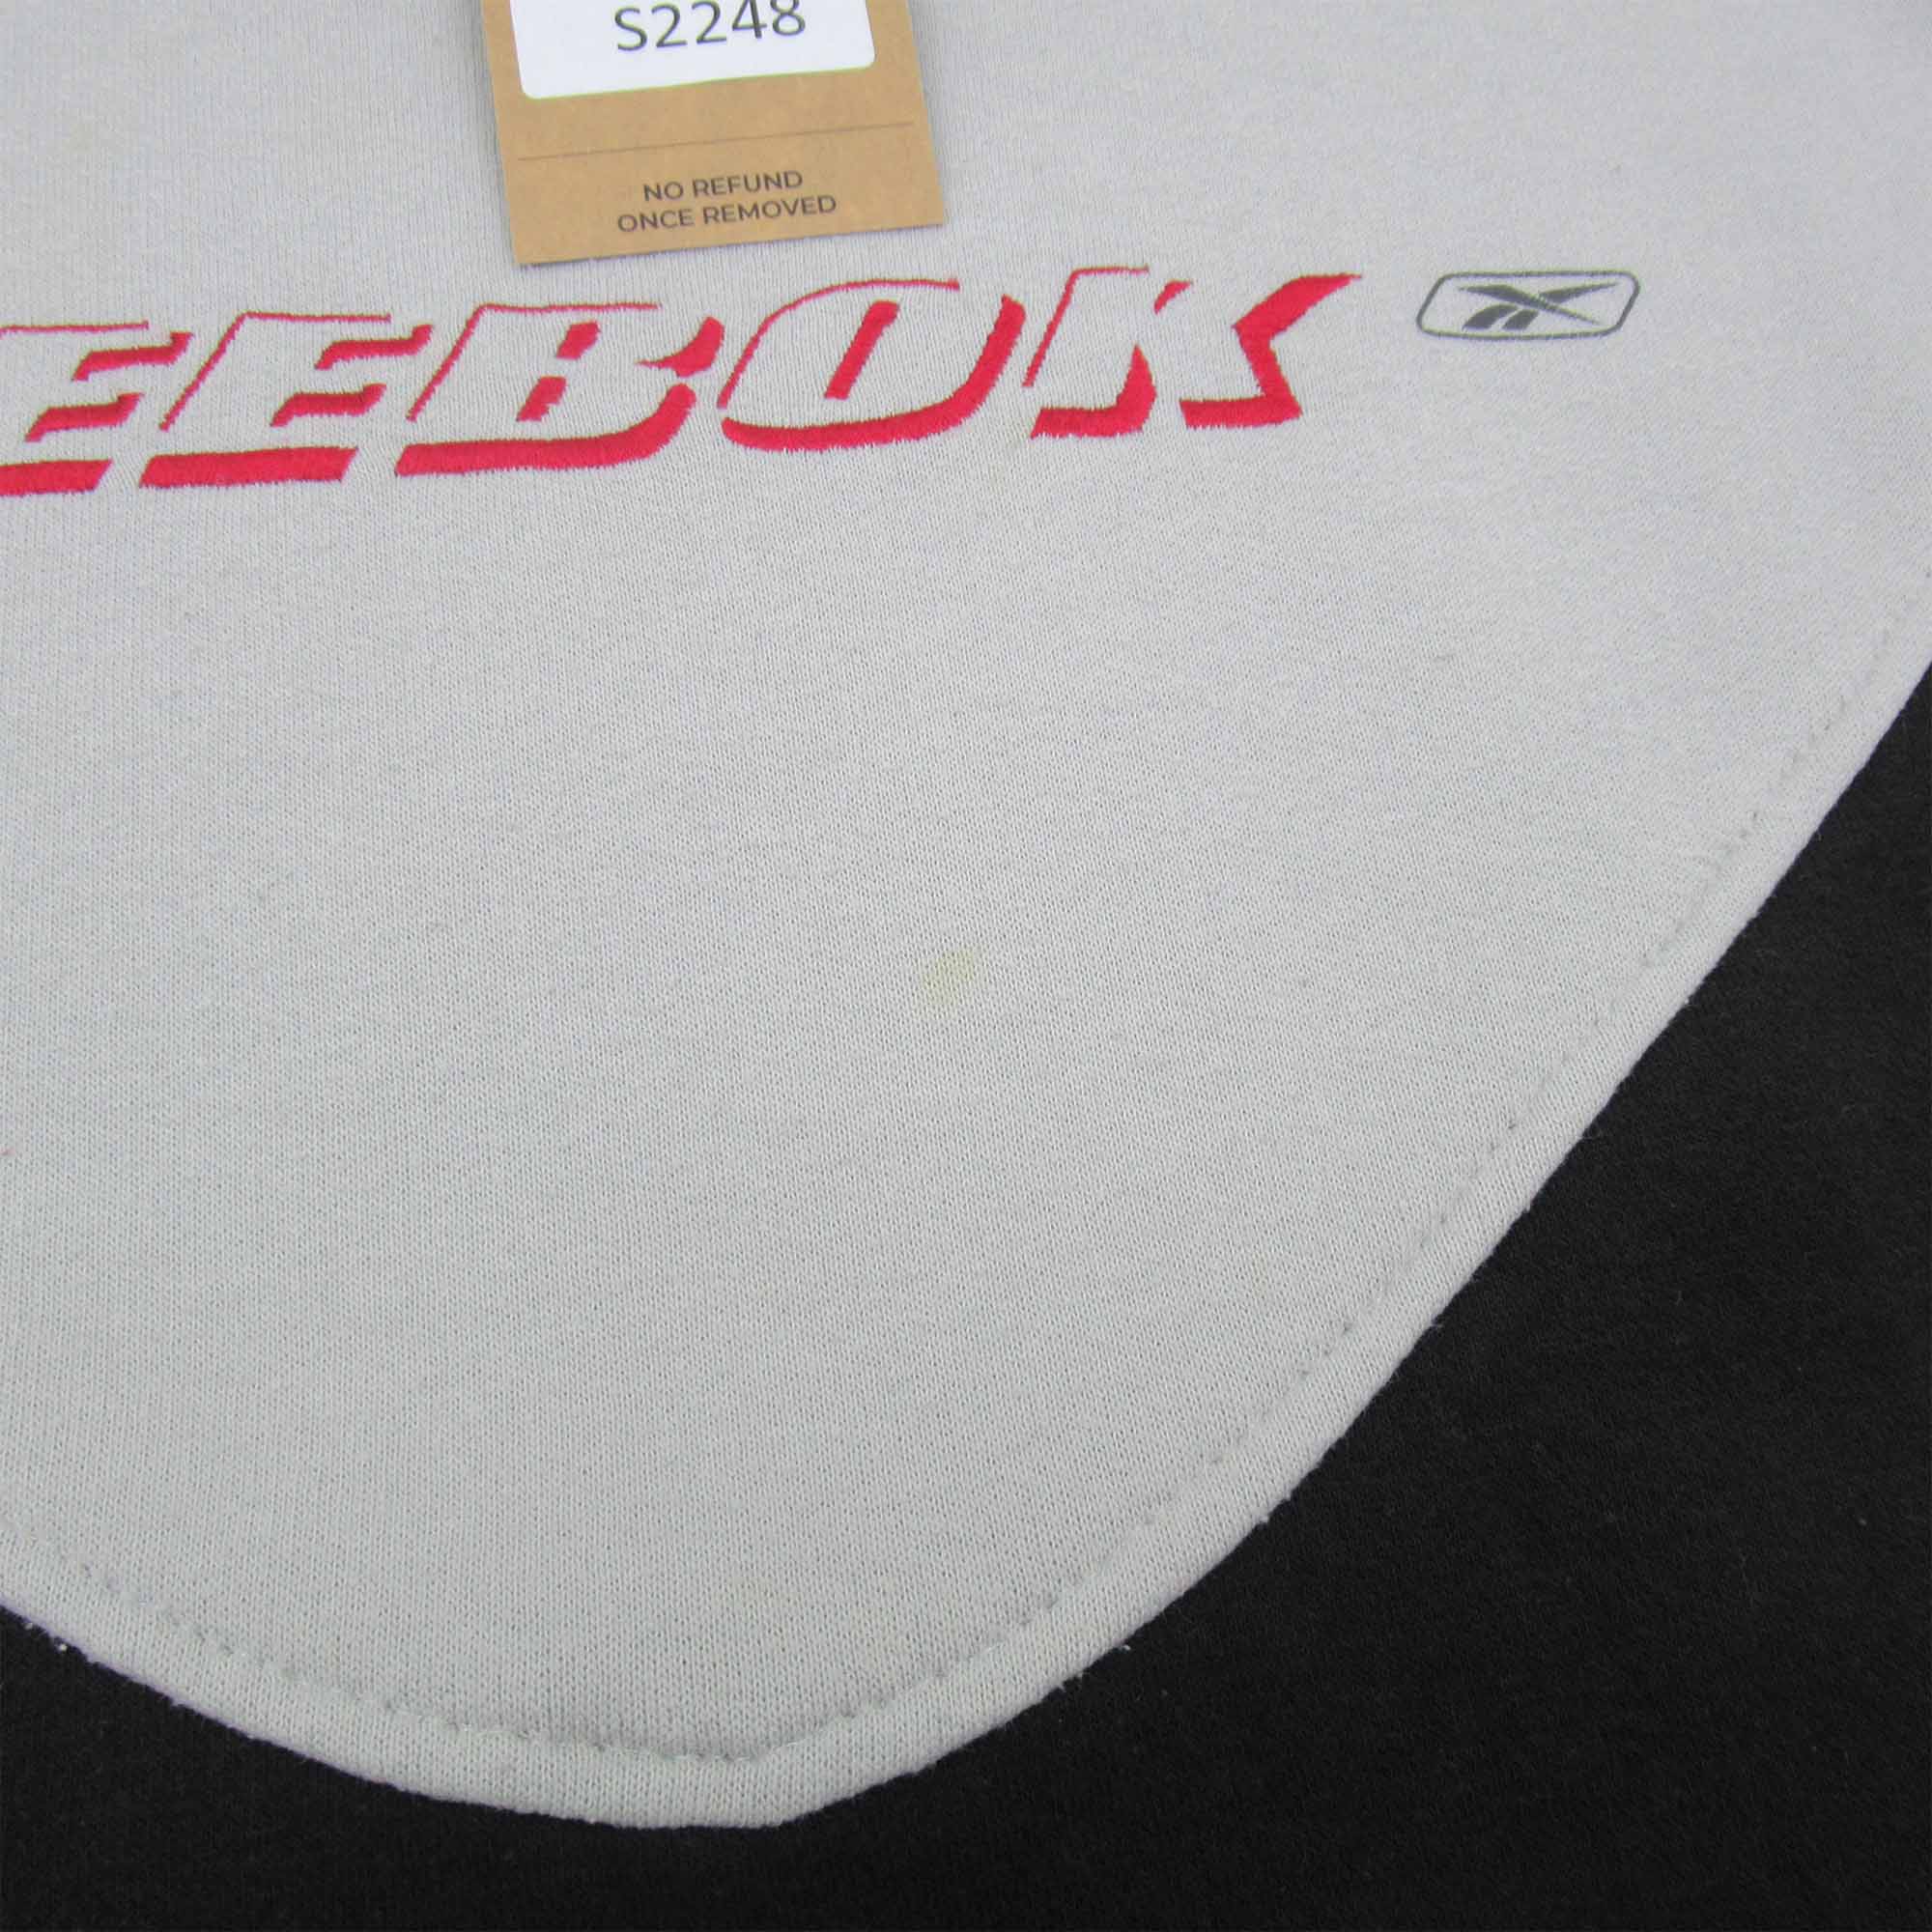 Reebok Rework Sweatshirt -  XL